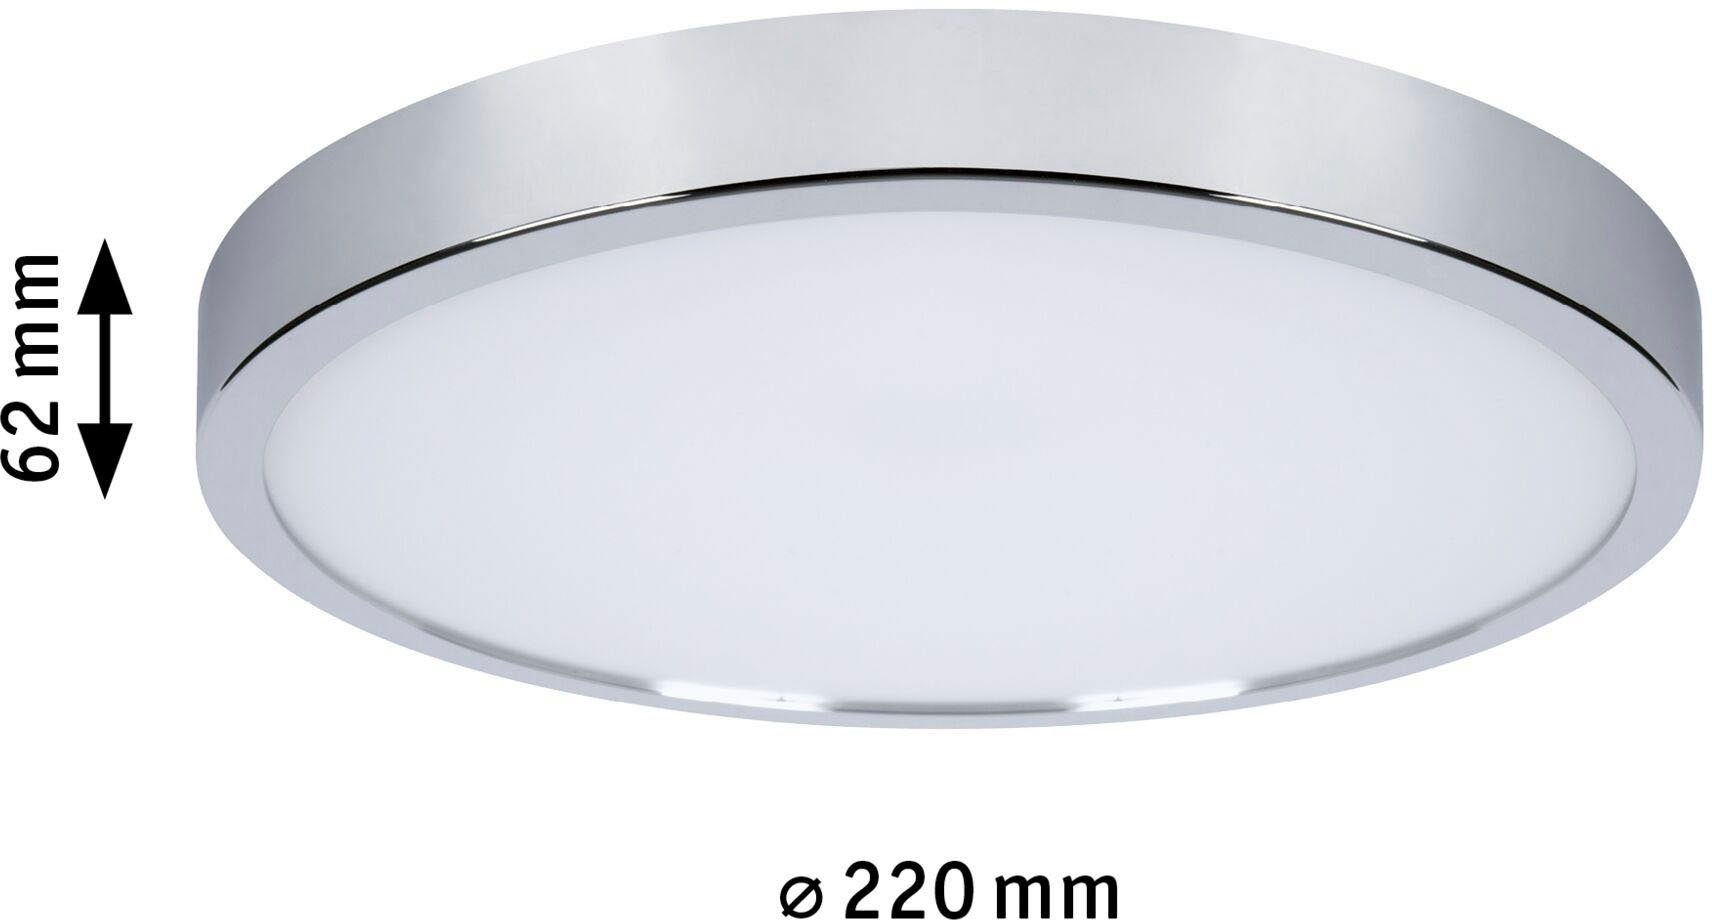 Aviar, fest integriert, Tageslichtweiß LED Paulmann Deckenleuchte LED